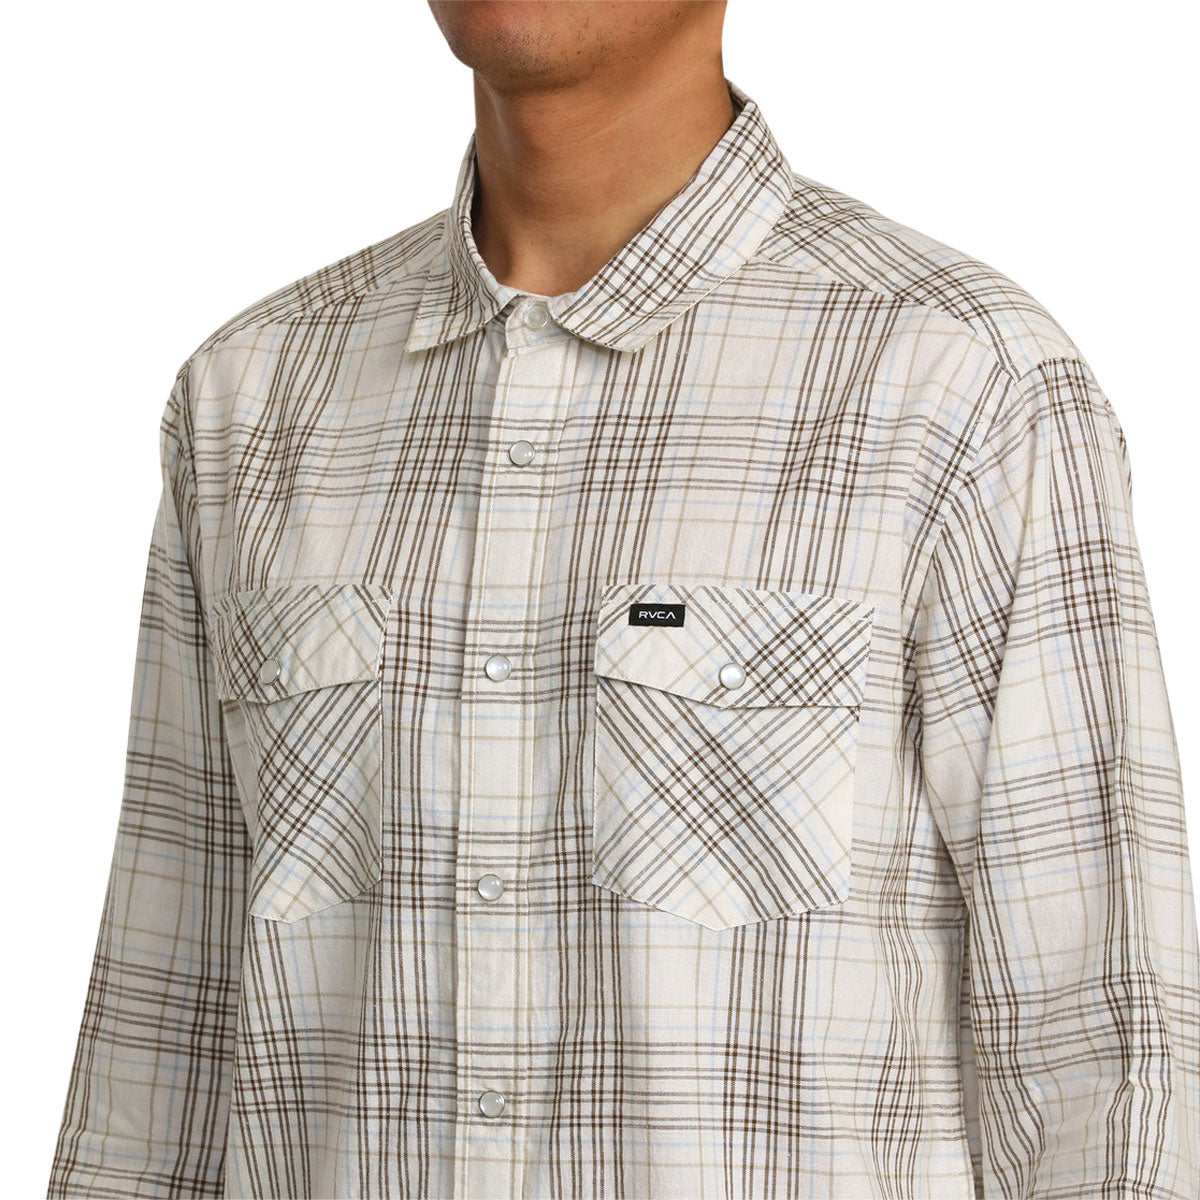 RVCA Neps Plaid Long Sleeve Shirt - Natural image 3